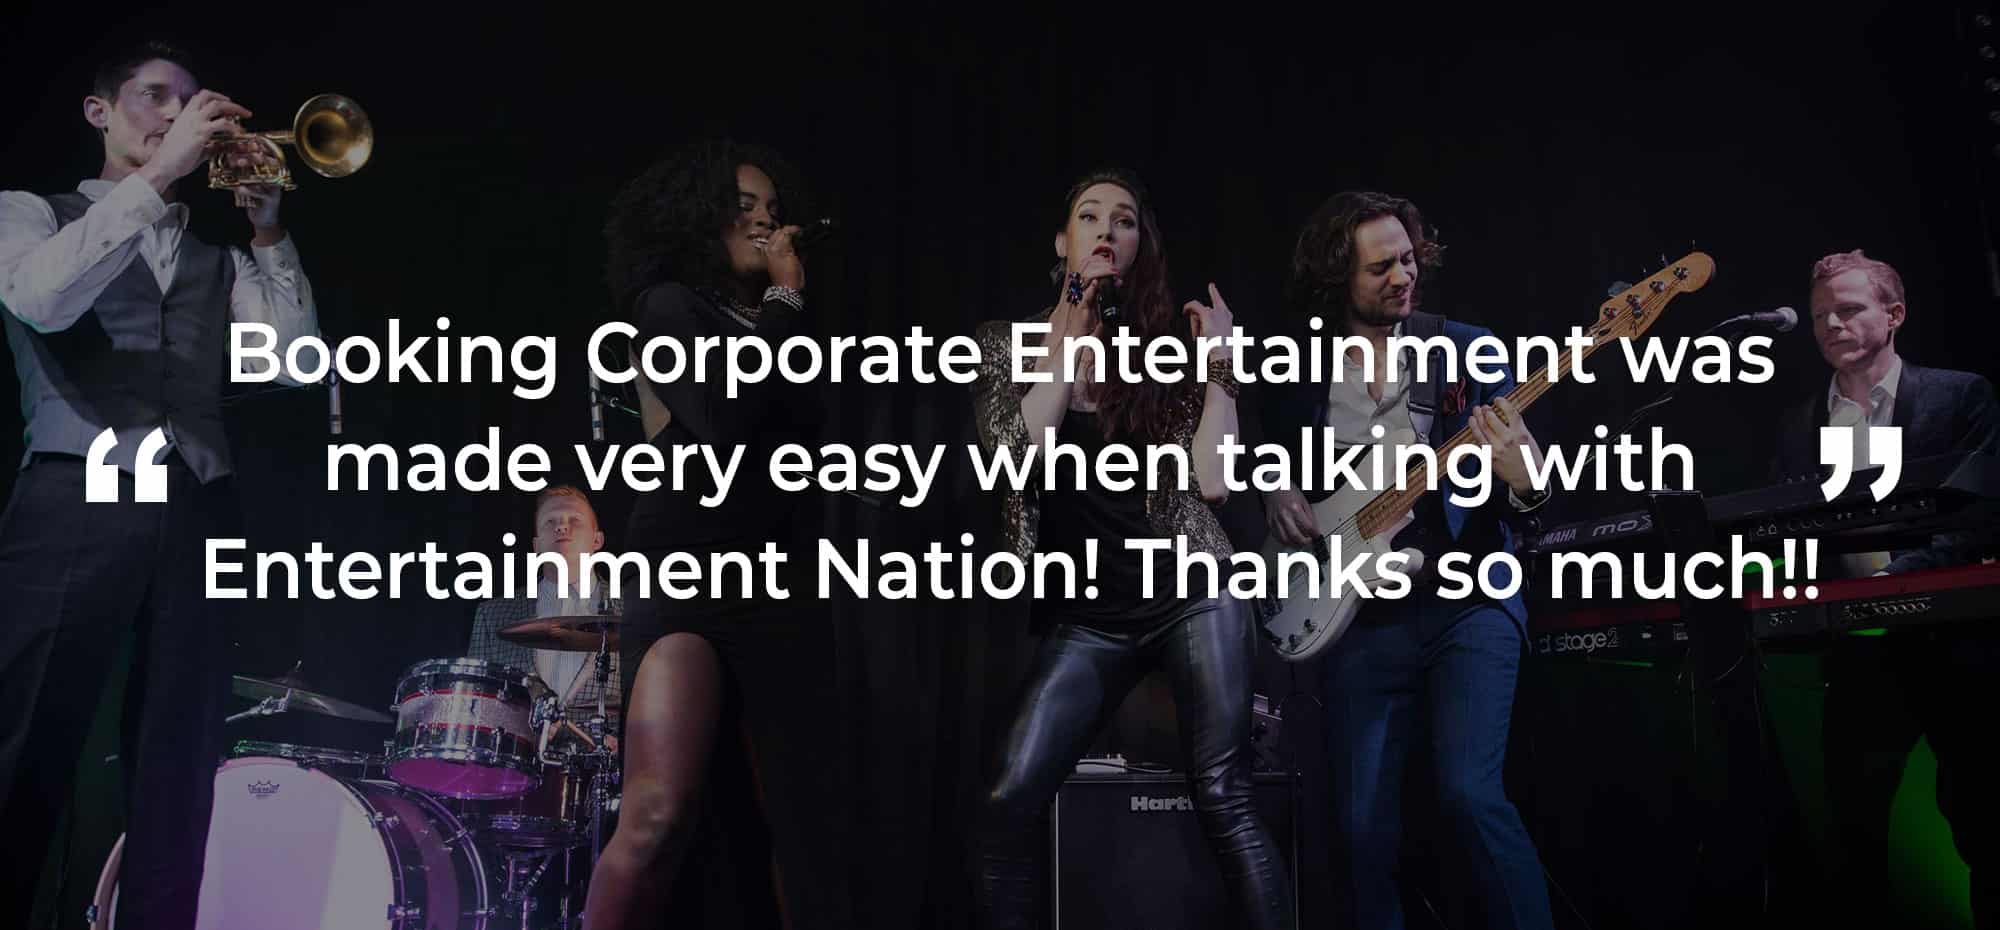 Review of Corporate Entertainment Birmingham